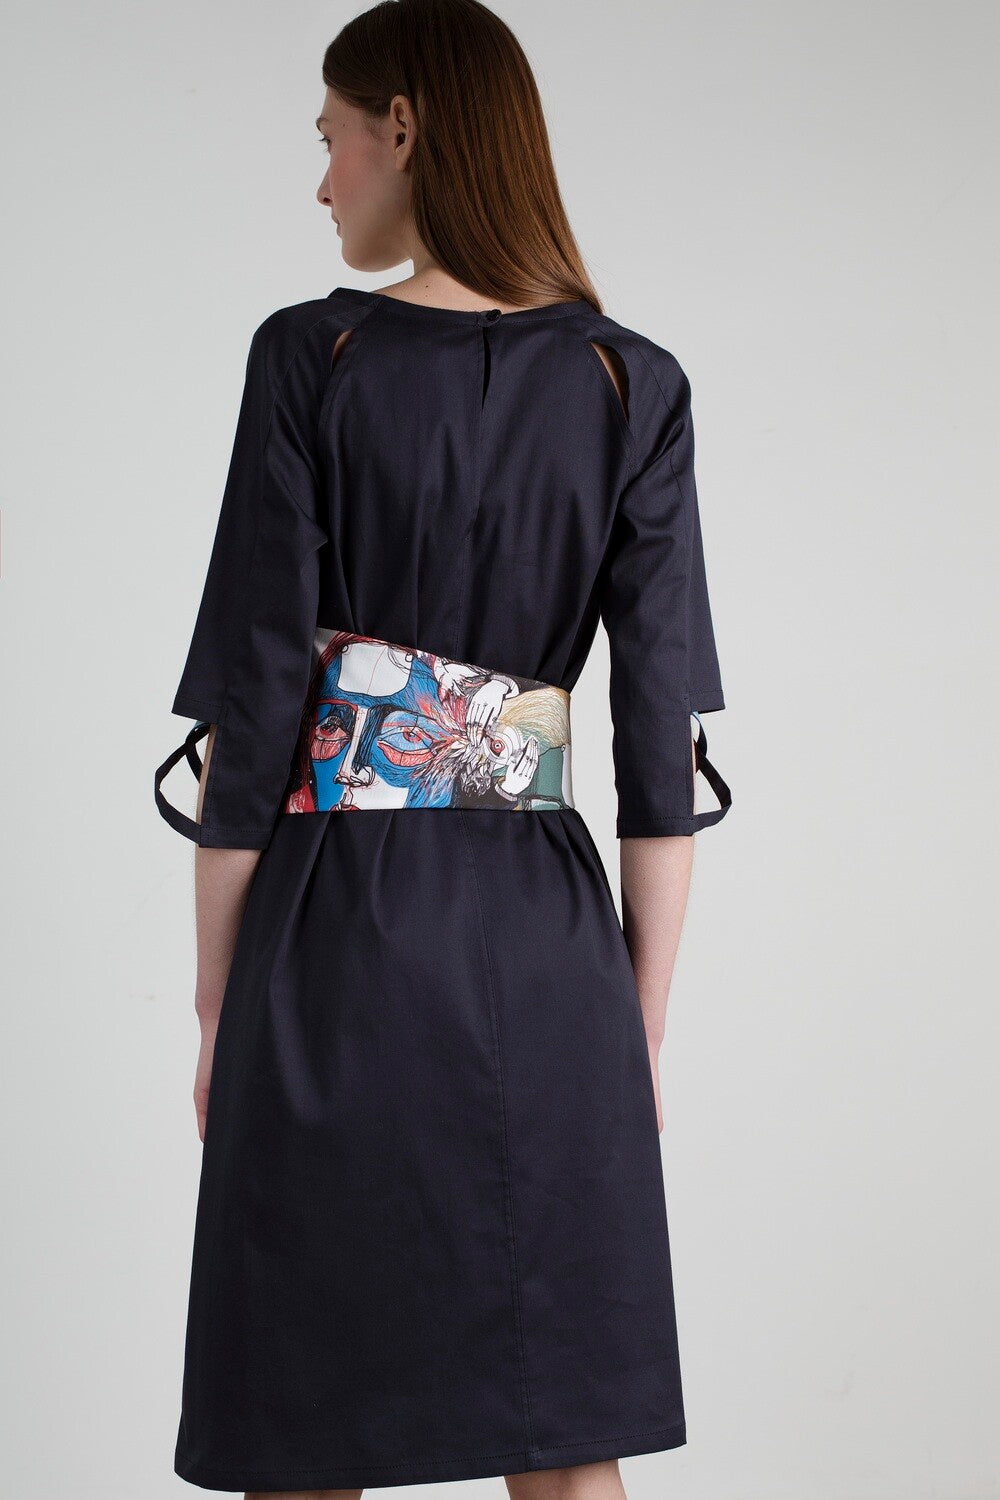 Dark blue dress with printed belt